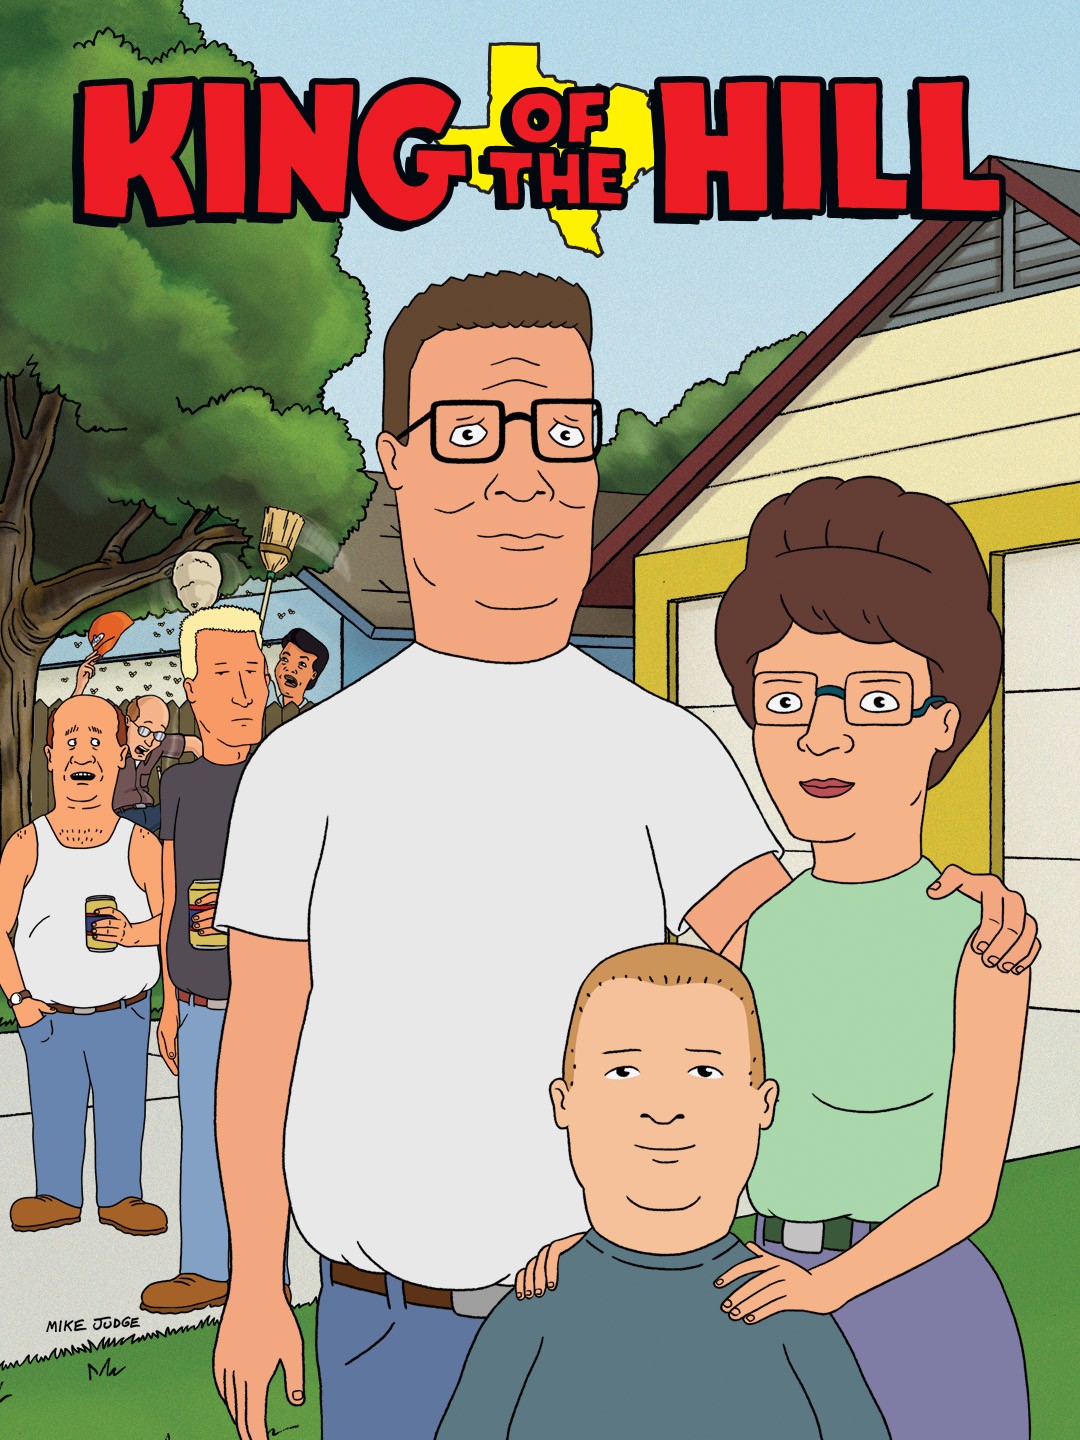 King of the Hill (season 3) - Wikipedia